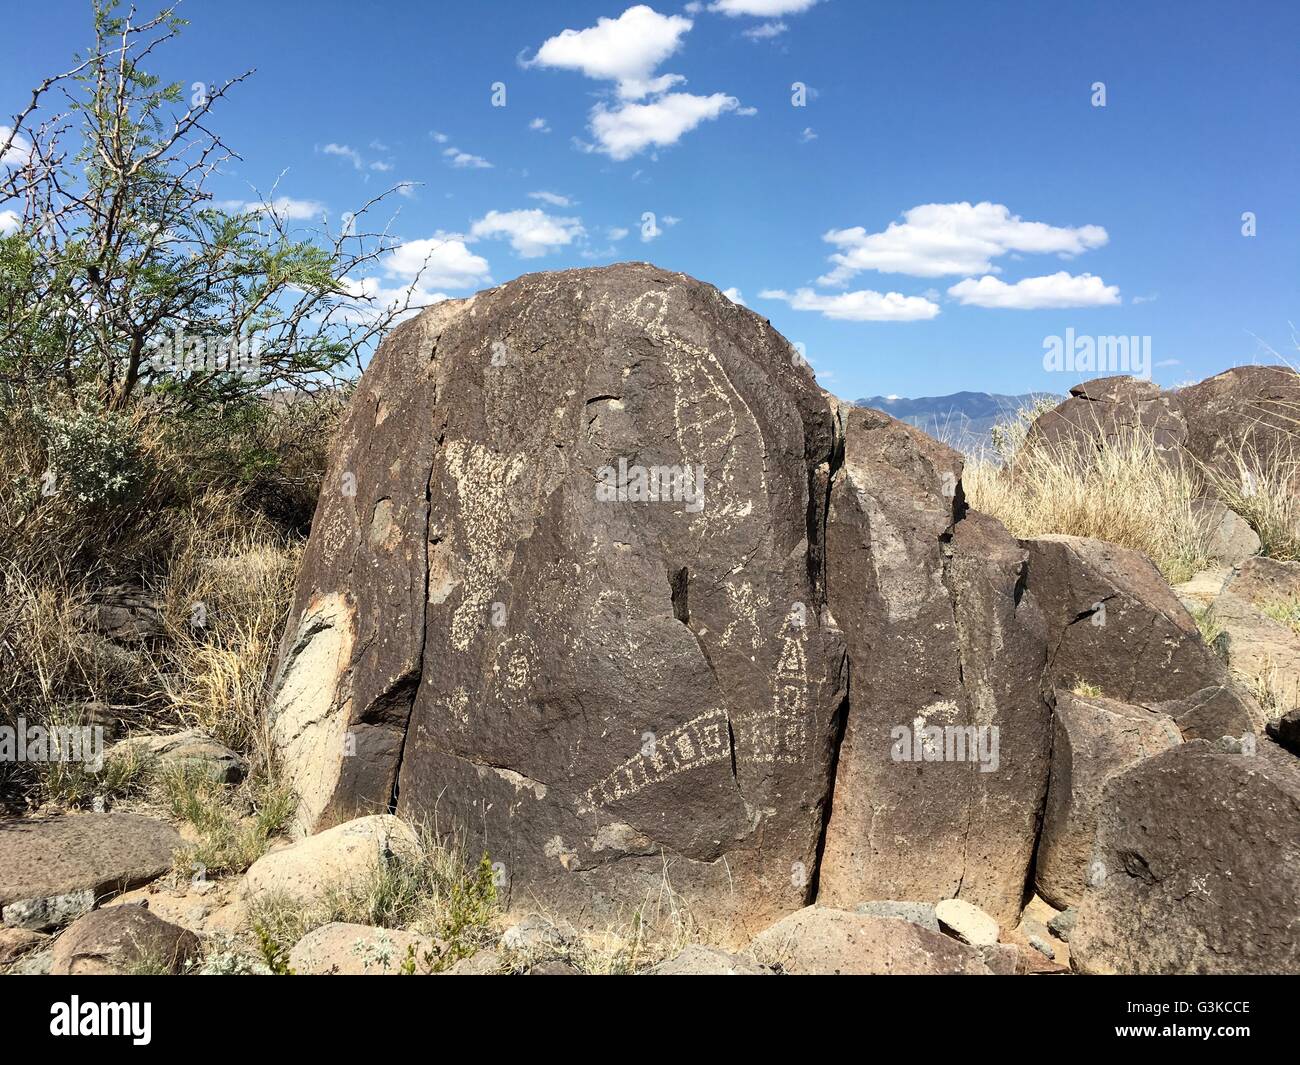 Native Americans (Jornada Mogollon people) carved petroglyphs on rocks at Three Rivers Petroglyph Site near Tularosa, New Mexico Stock Photo